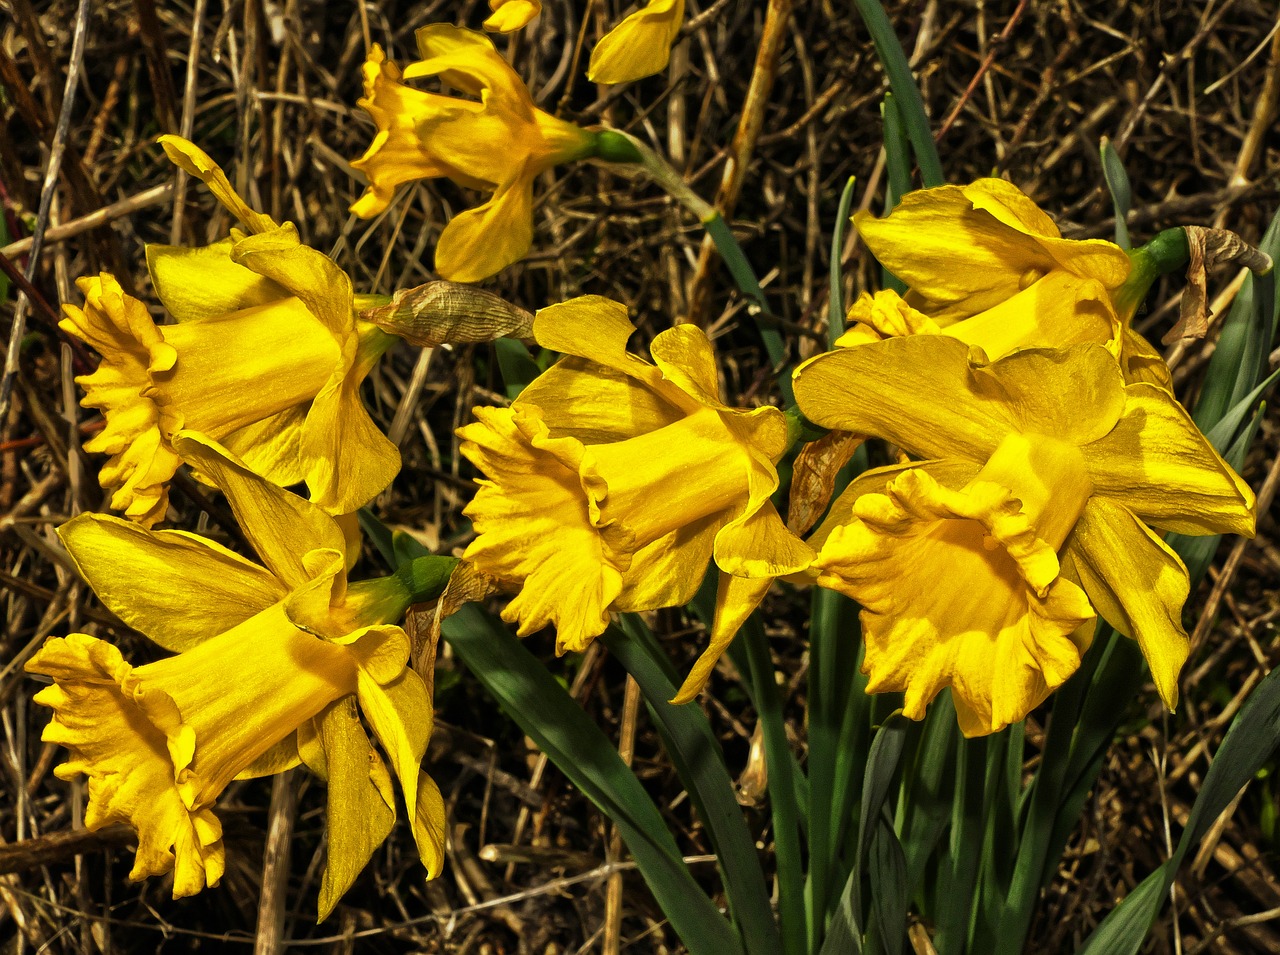 a group of yellow daffodils in a field, a portrait, flickr, hyperdetail, ruffles, roadside, f / 3